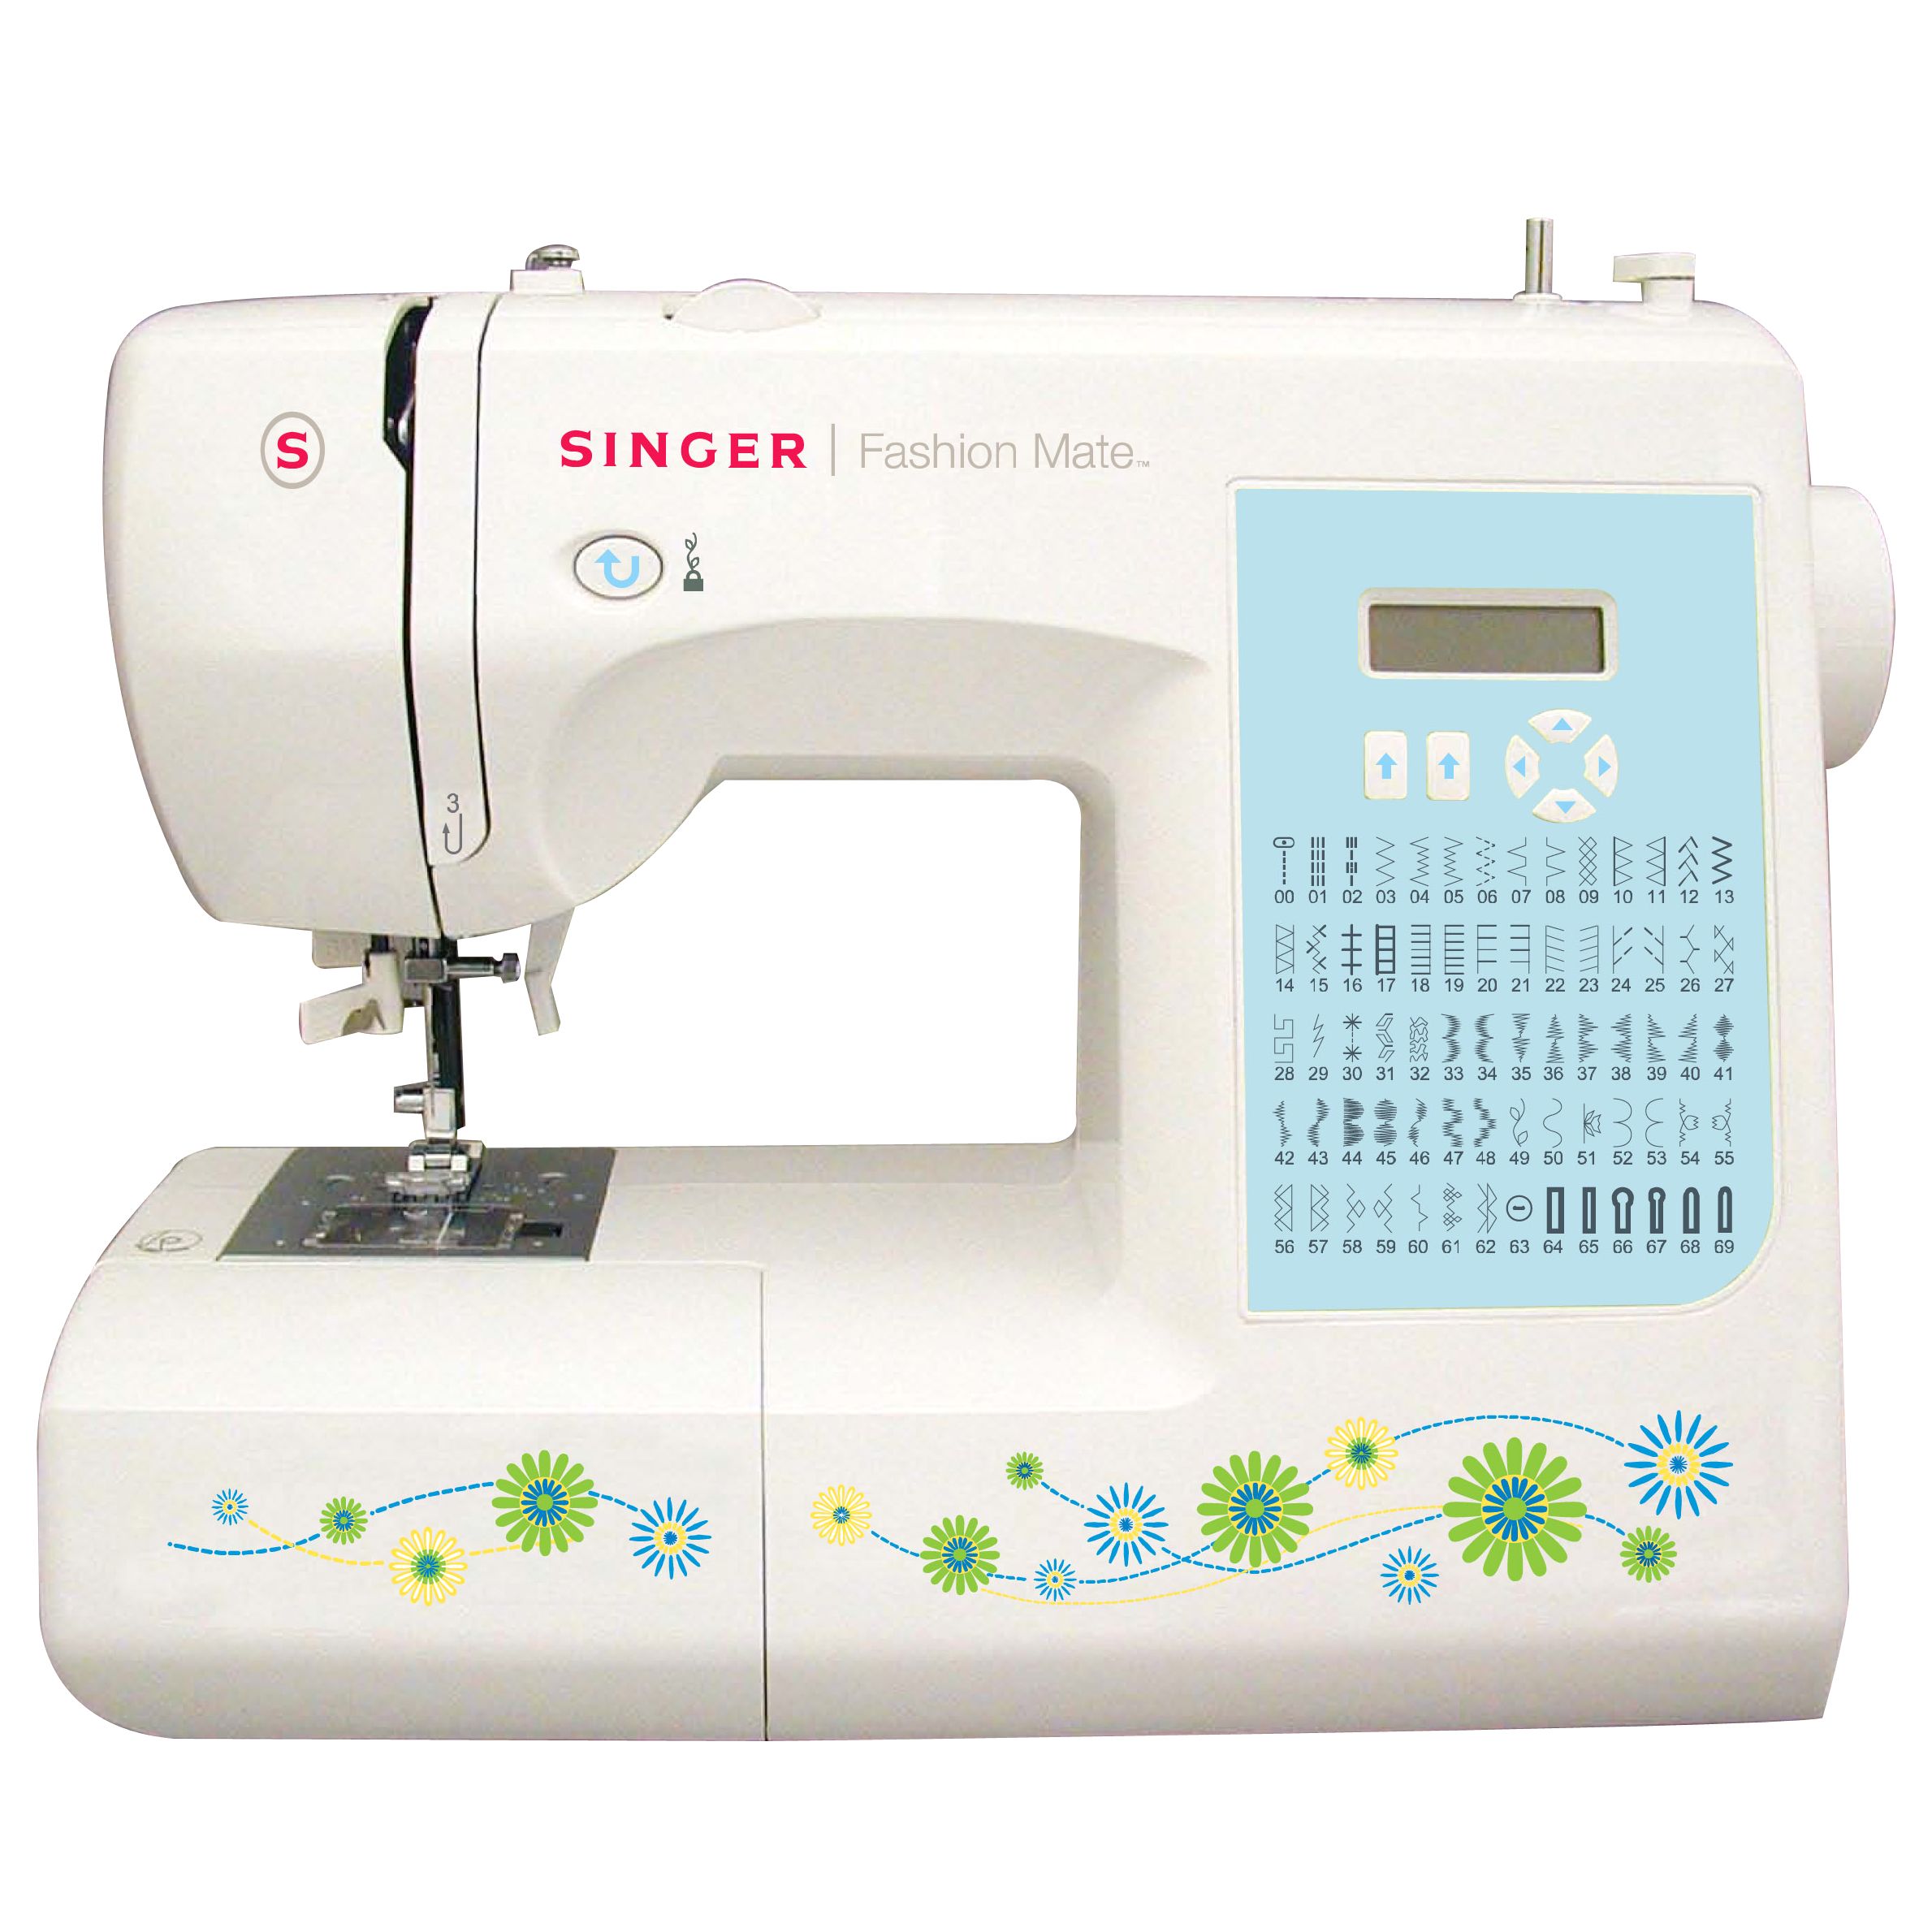 Singer Fashion Mate 7256 Sewing Machine `Fashion